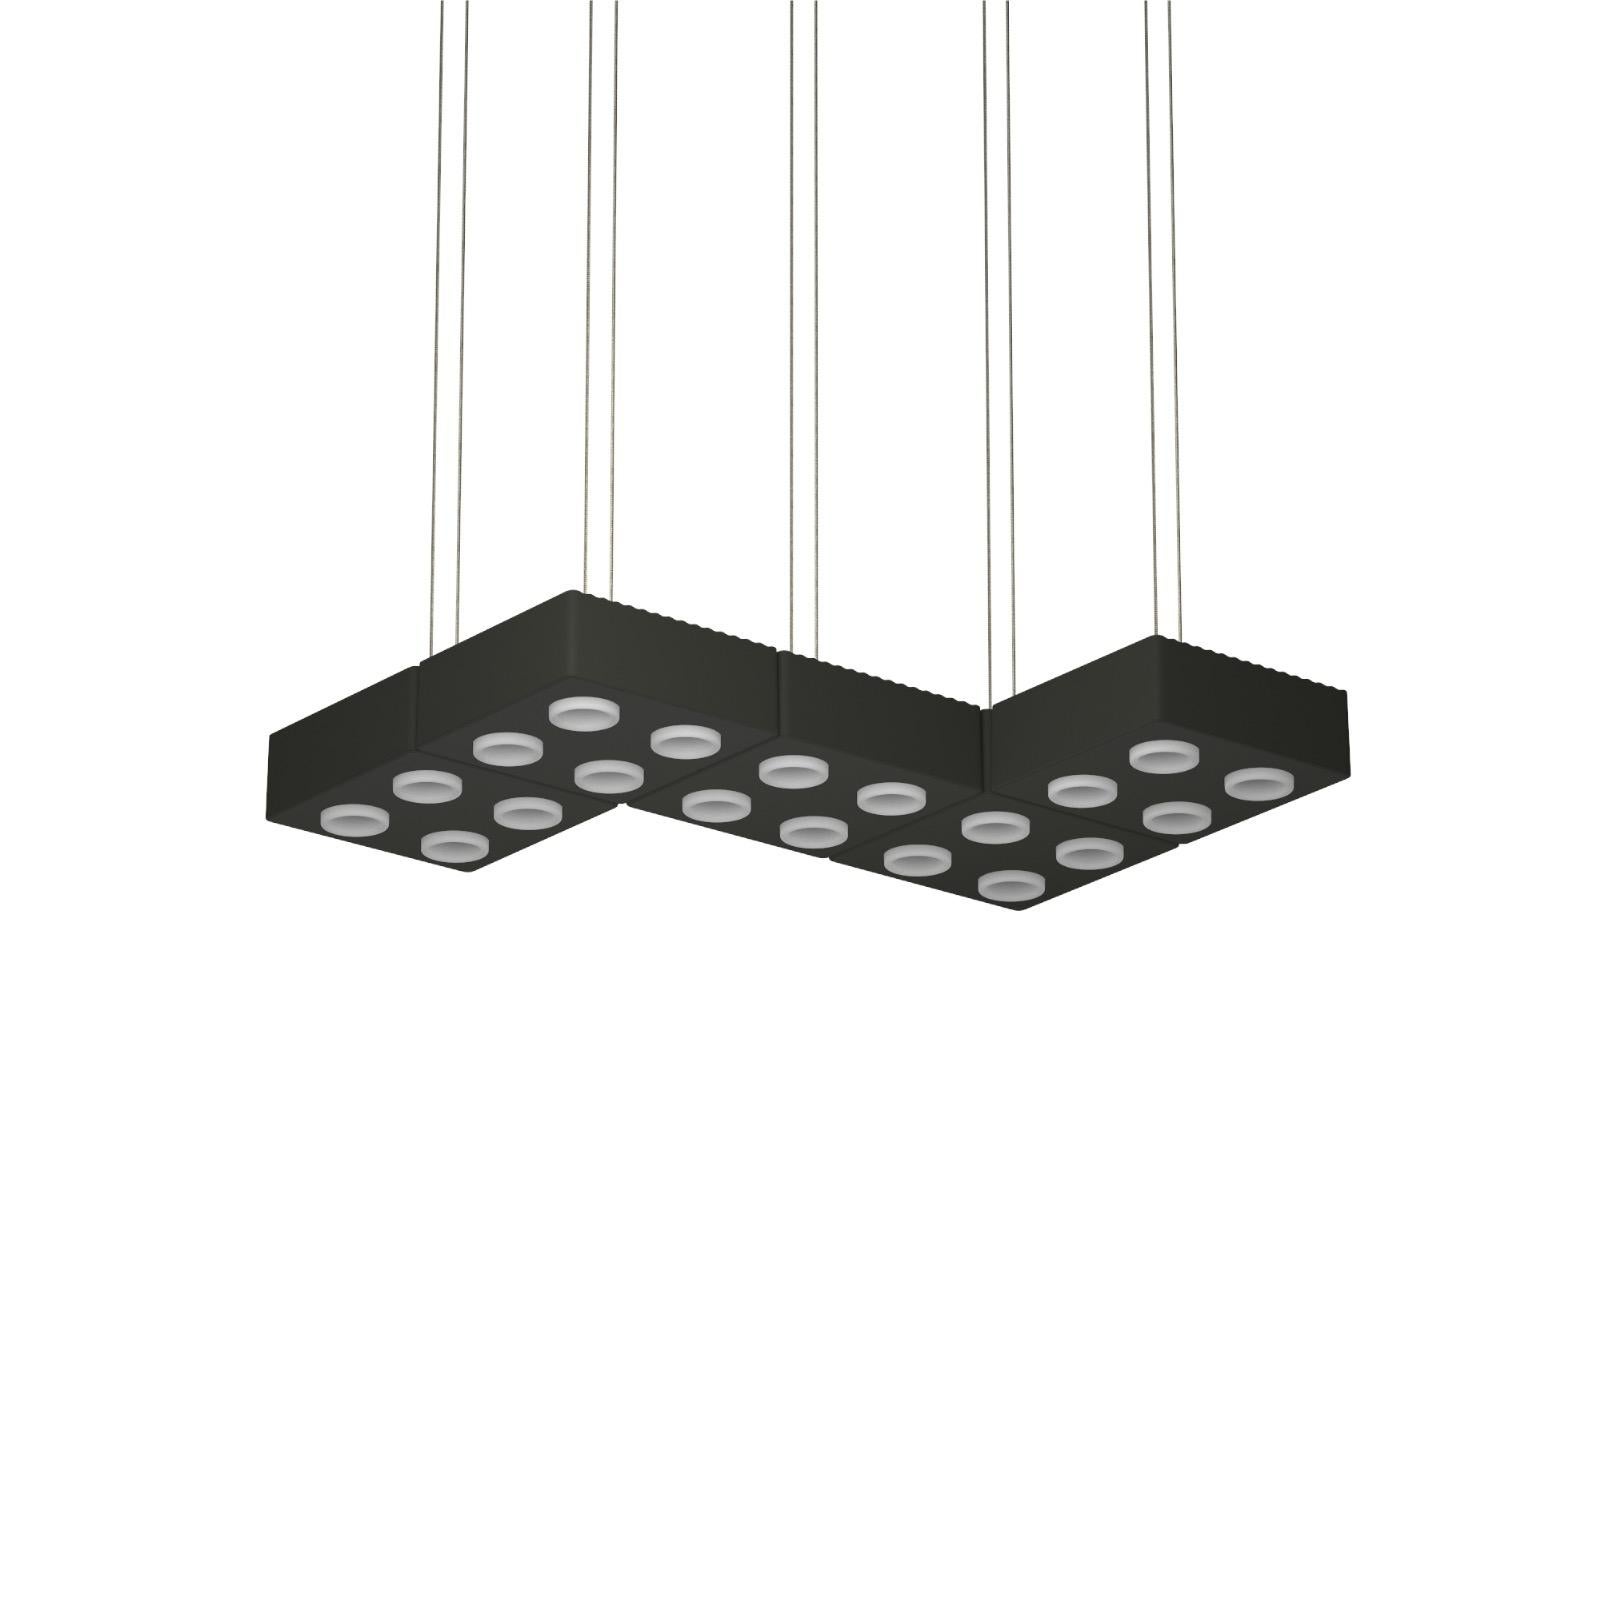 Domino Pendant lamp by Sylvain Willenz x AGO Lighting
Charcoal - Quintet Pendant Lamp

Materials: Aluminum 
Light Source: Integrated LED (COB), DC
Watt. 75 W (15W x 5)
Color temp. 2700 / 3000K
Cable Length: 3M 

Available colors:
Charcoal,